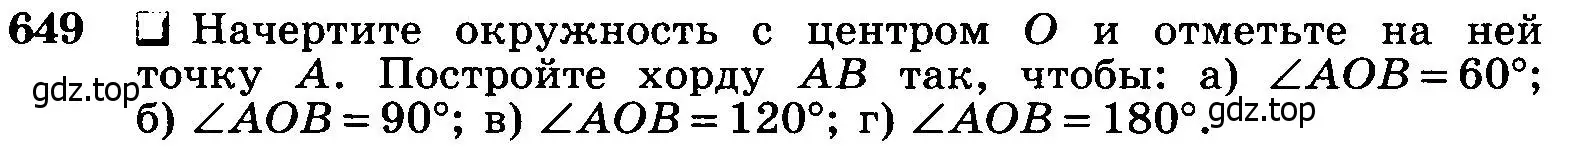 Условие номер 649 (страница 170) гдз по геометрии 7-9 класс Атанасян, Бутузов, учебник